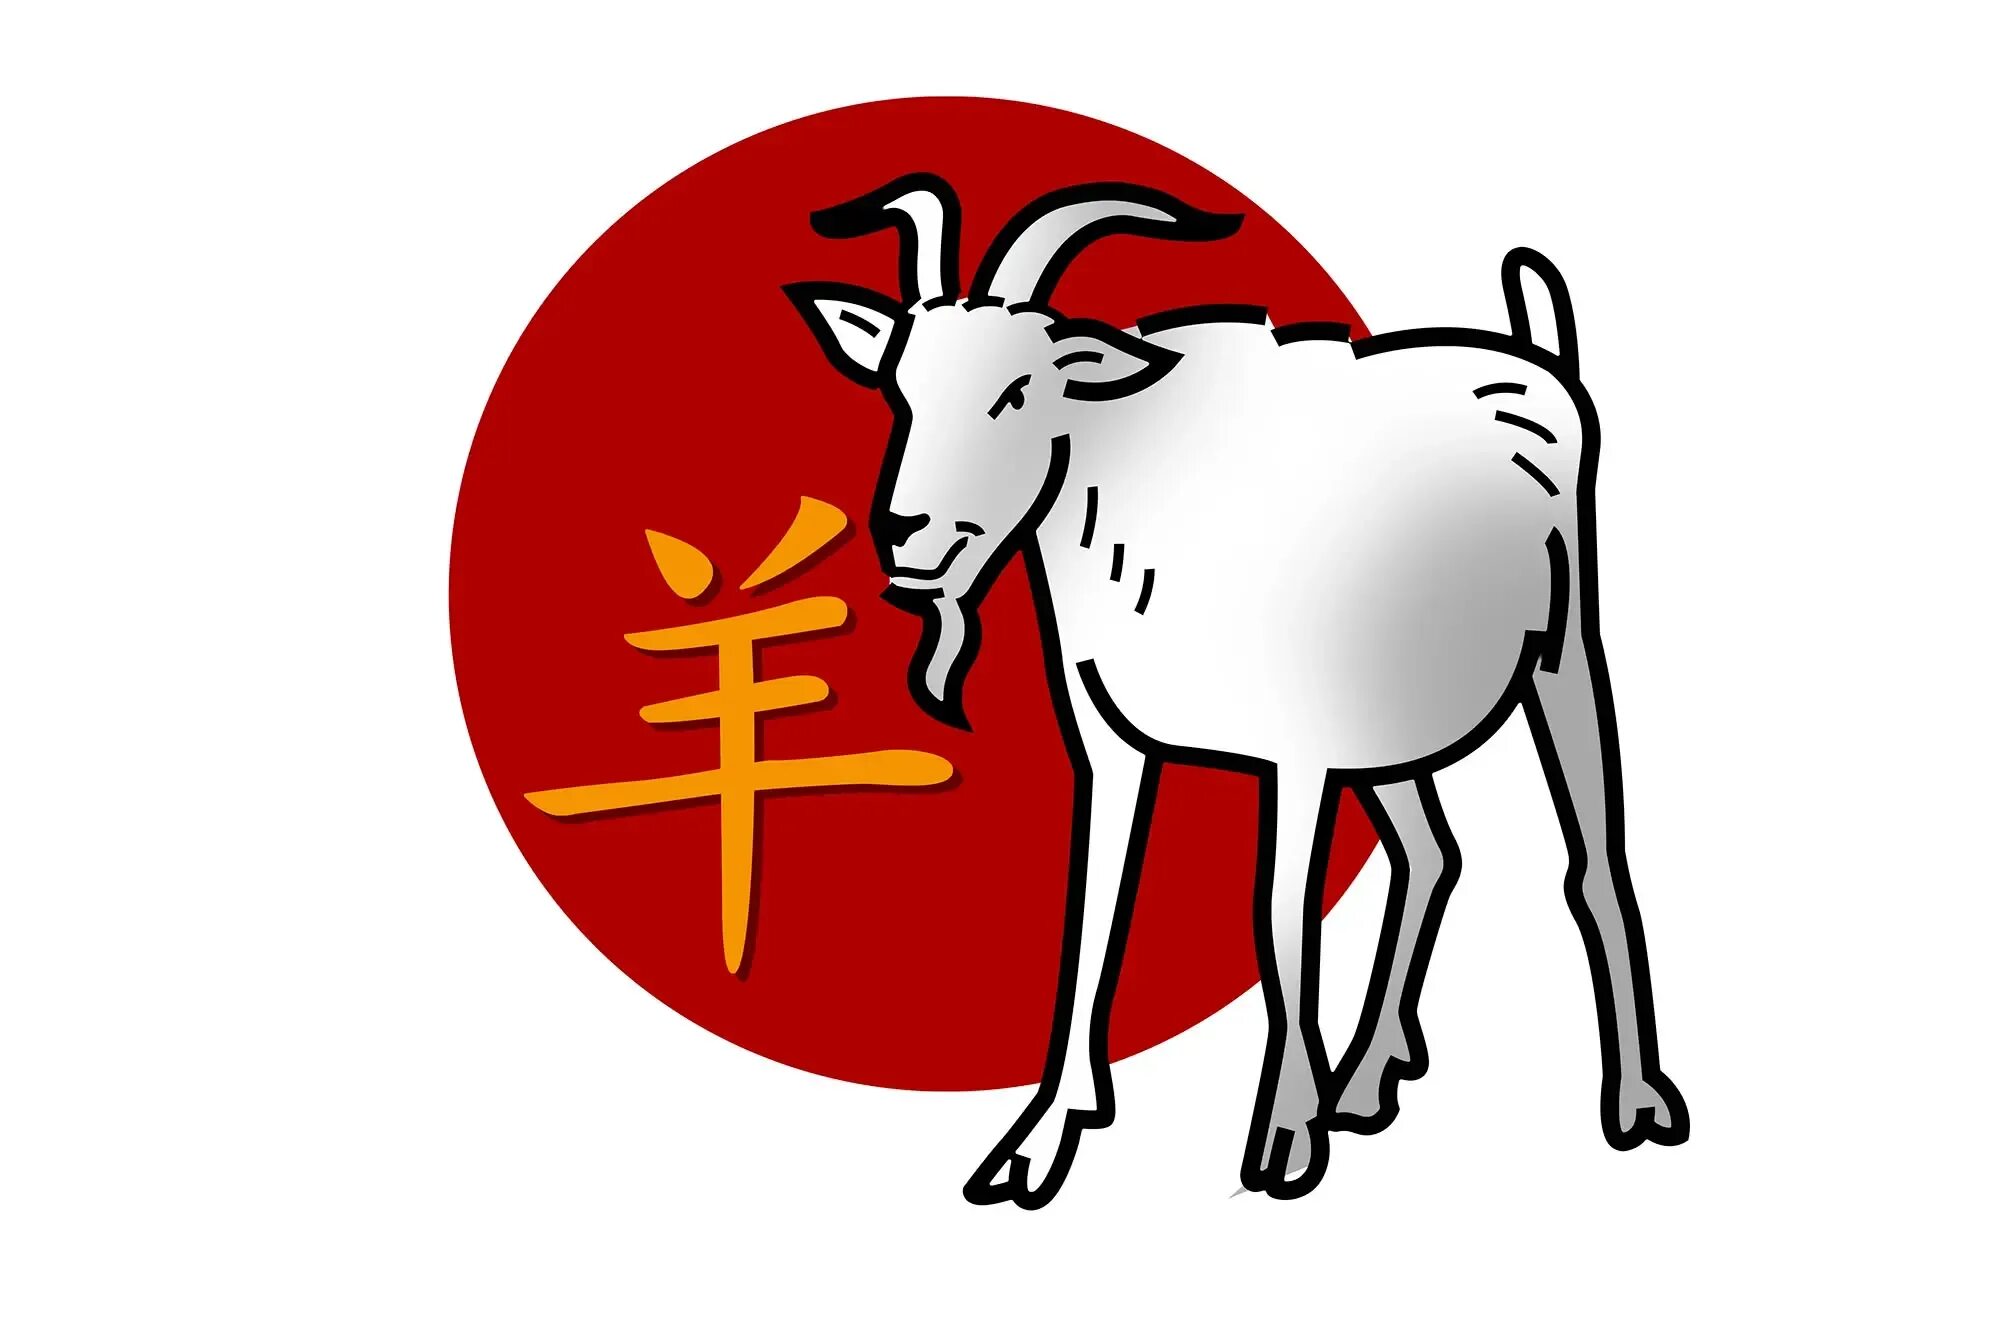 Зодиак год козы. Китайский Зодиак коза. Год козы знак. Восточный гороскоп коза. Китайский знак зодиака овца.